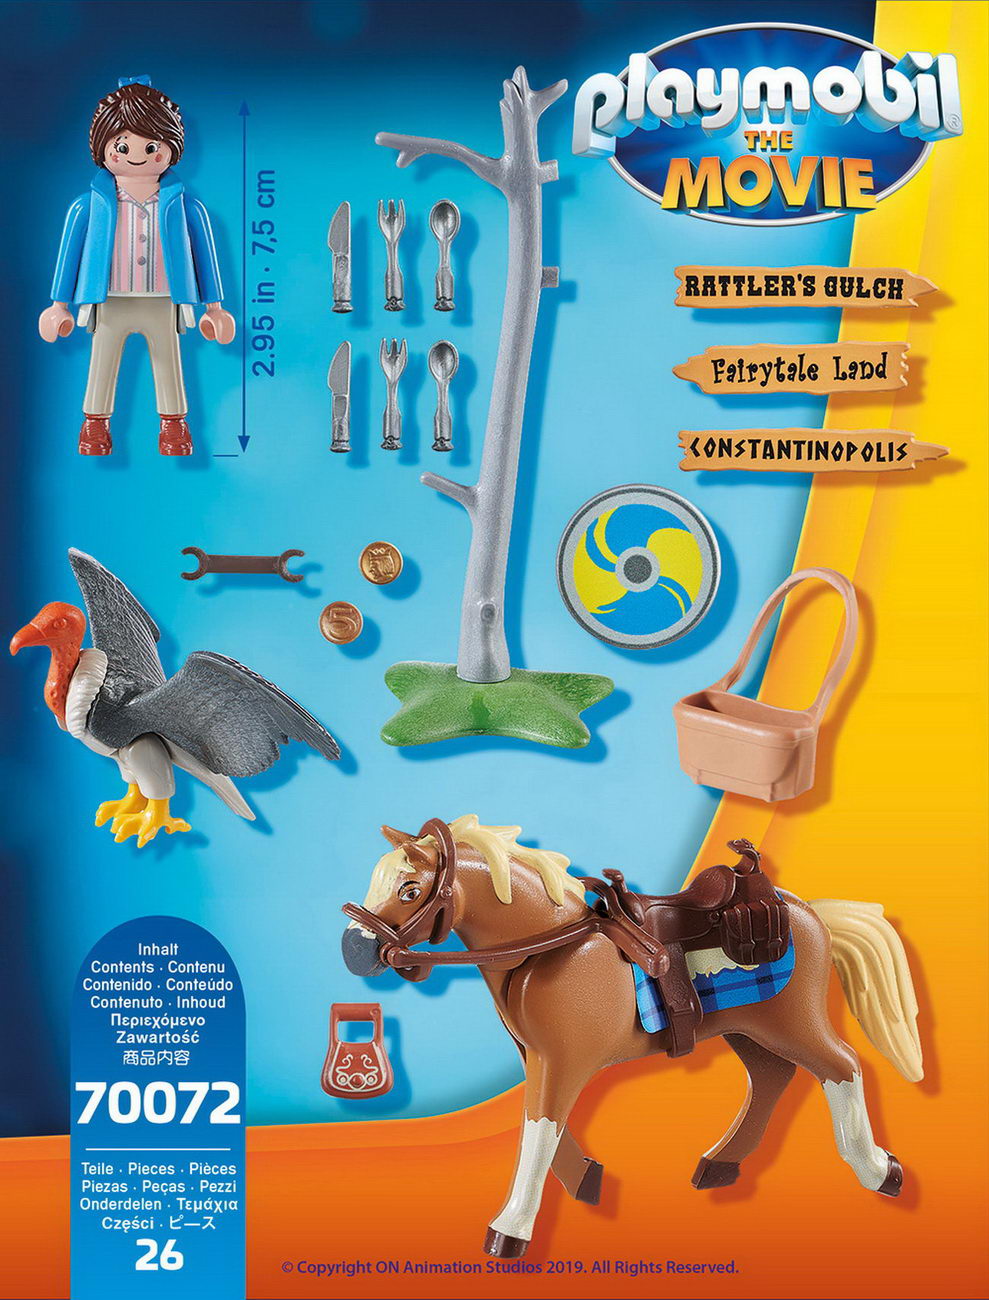 Playmobil 70072 - Marla mit Pferd (The Movie)